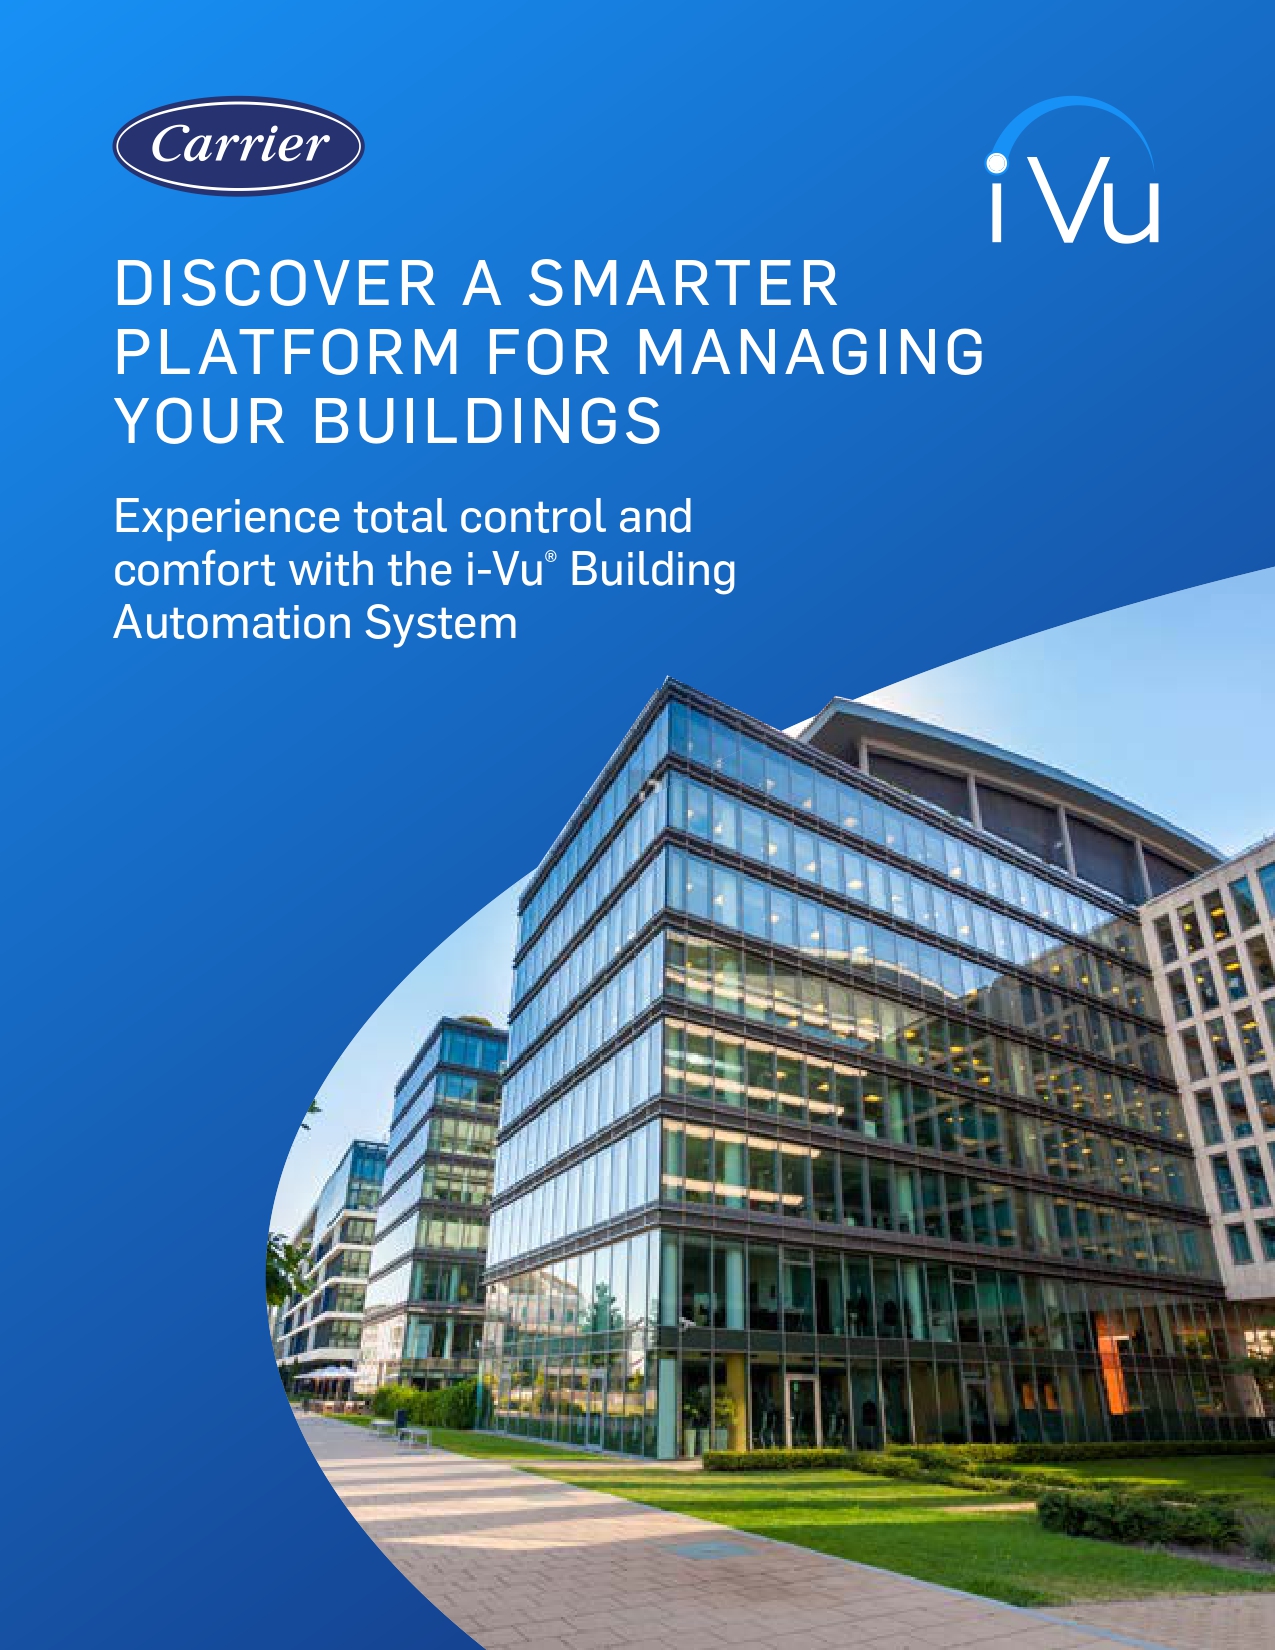 B.Grimm Technologies-Carrier-i-VU-Discover a Smarter Platform for Managing Your Building